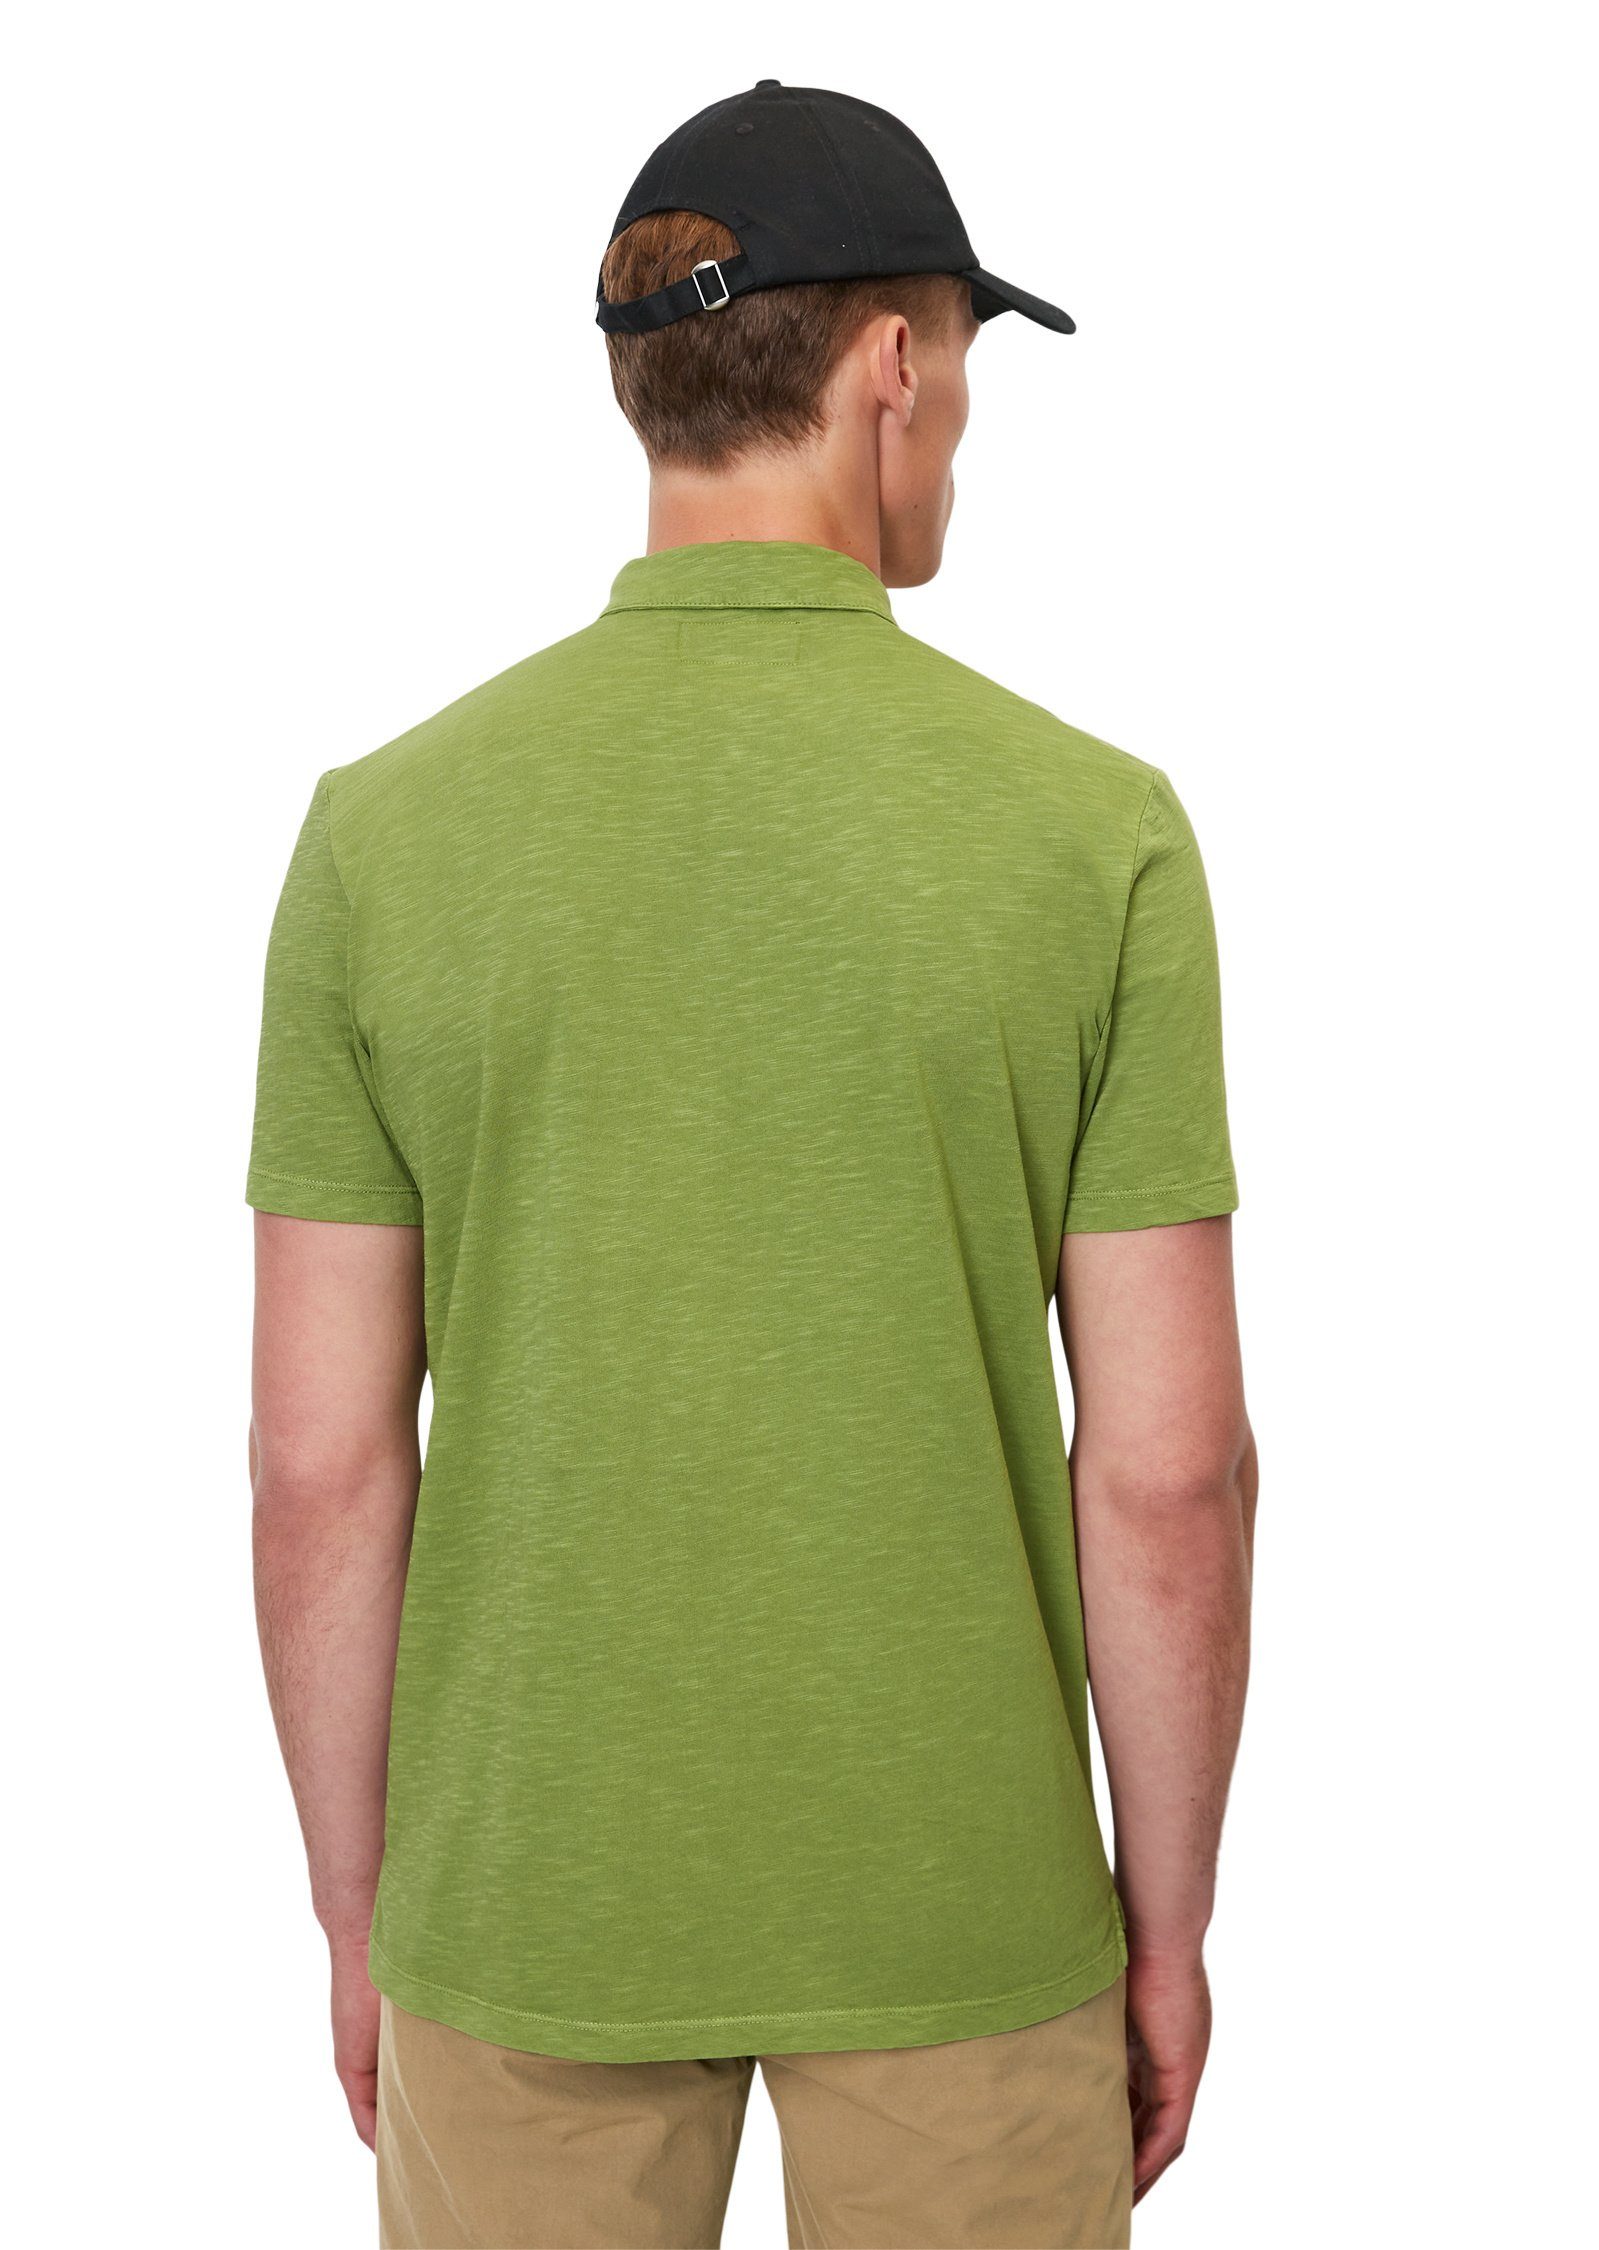 Marc O'Polo Poloshirt hochwertiger grün Bio-Baumwolle aus